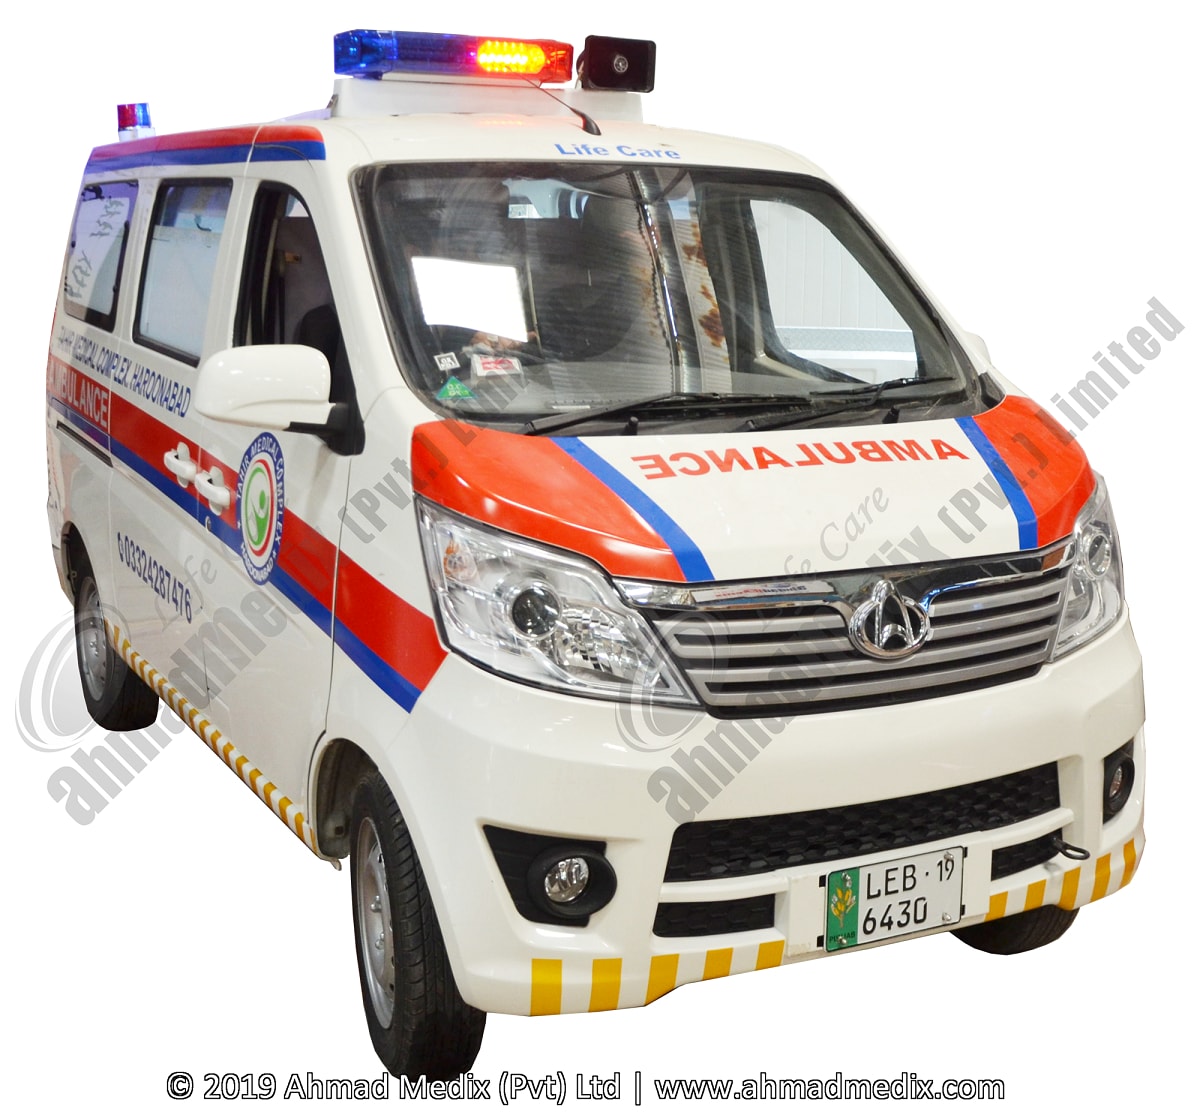 Changhan Ambulance